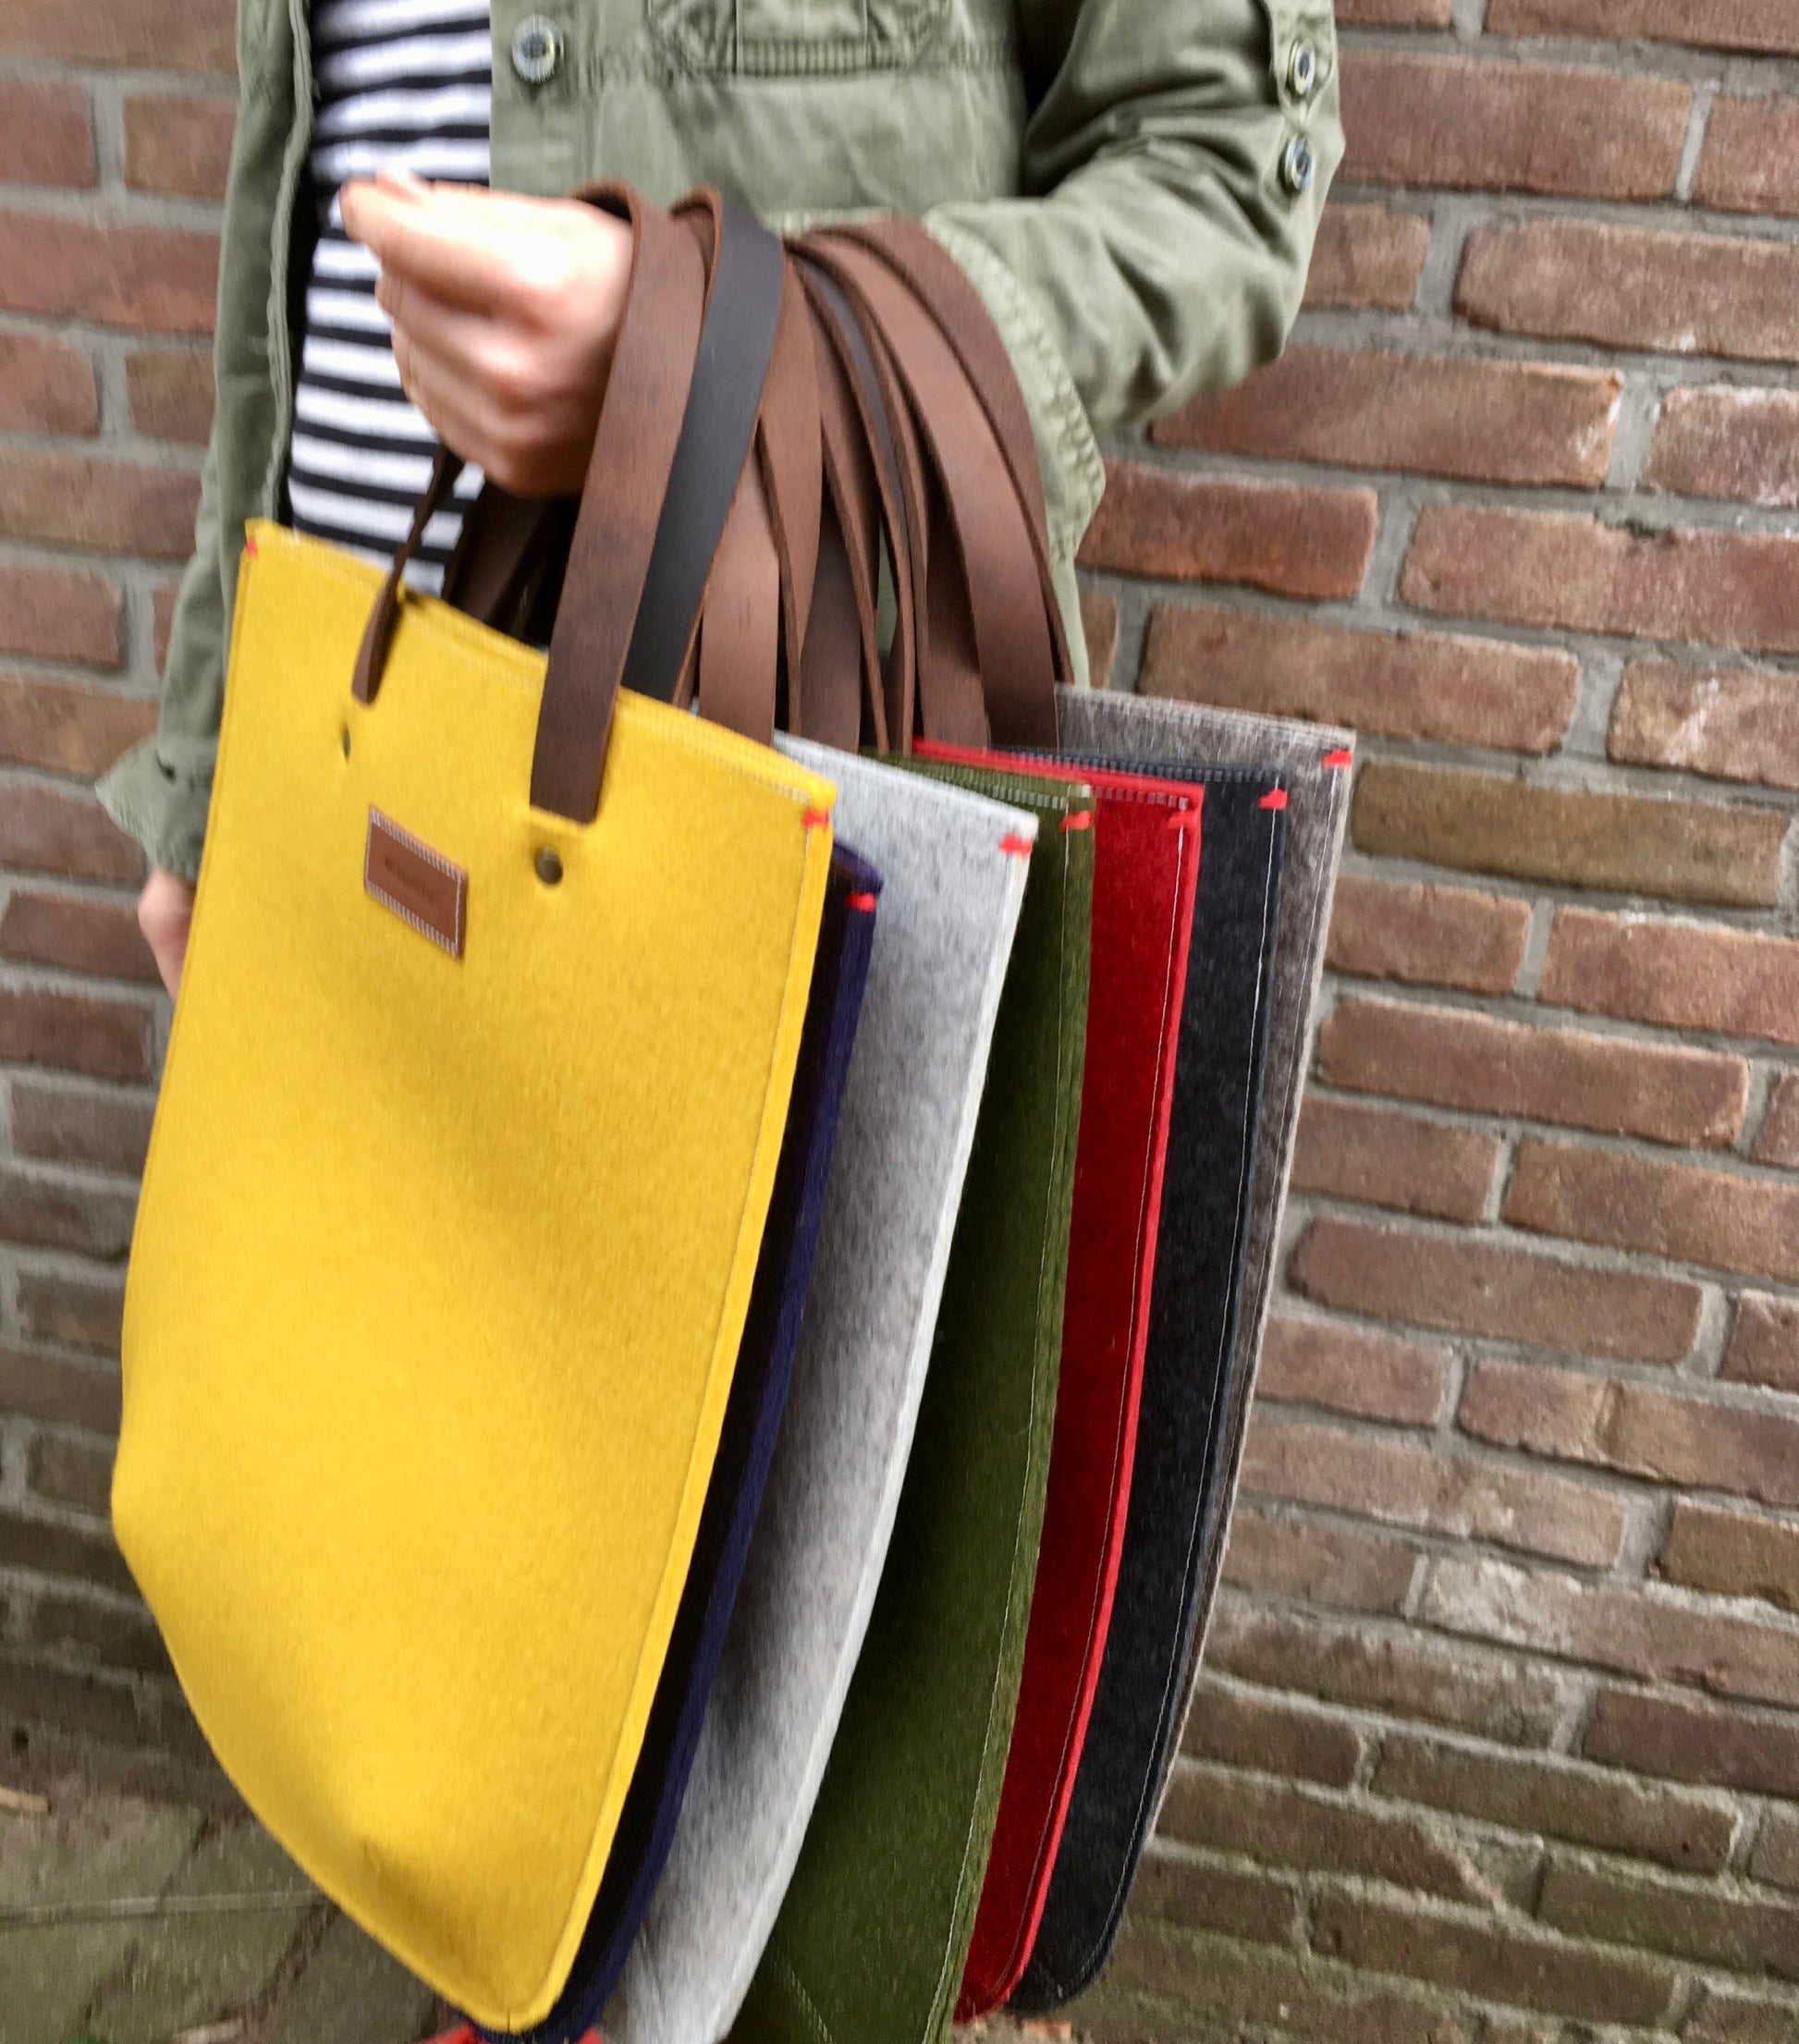 GRIFT tas in donker blauw vilt laptoptas - pure wol - minimalistisch ontwerp - Westerman Bags vilten tassen en hoezen. Dutch Design.